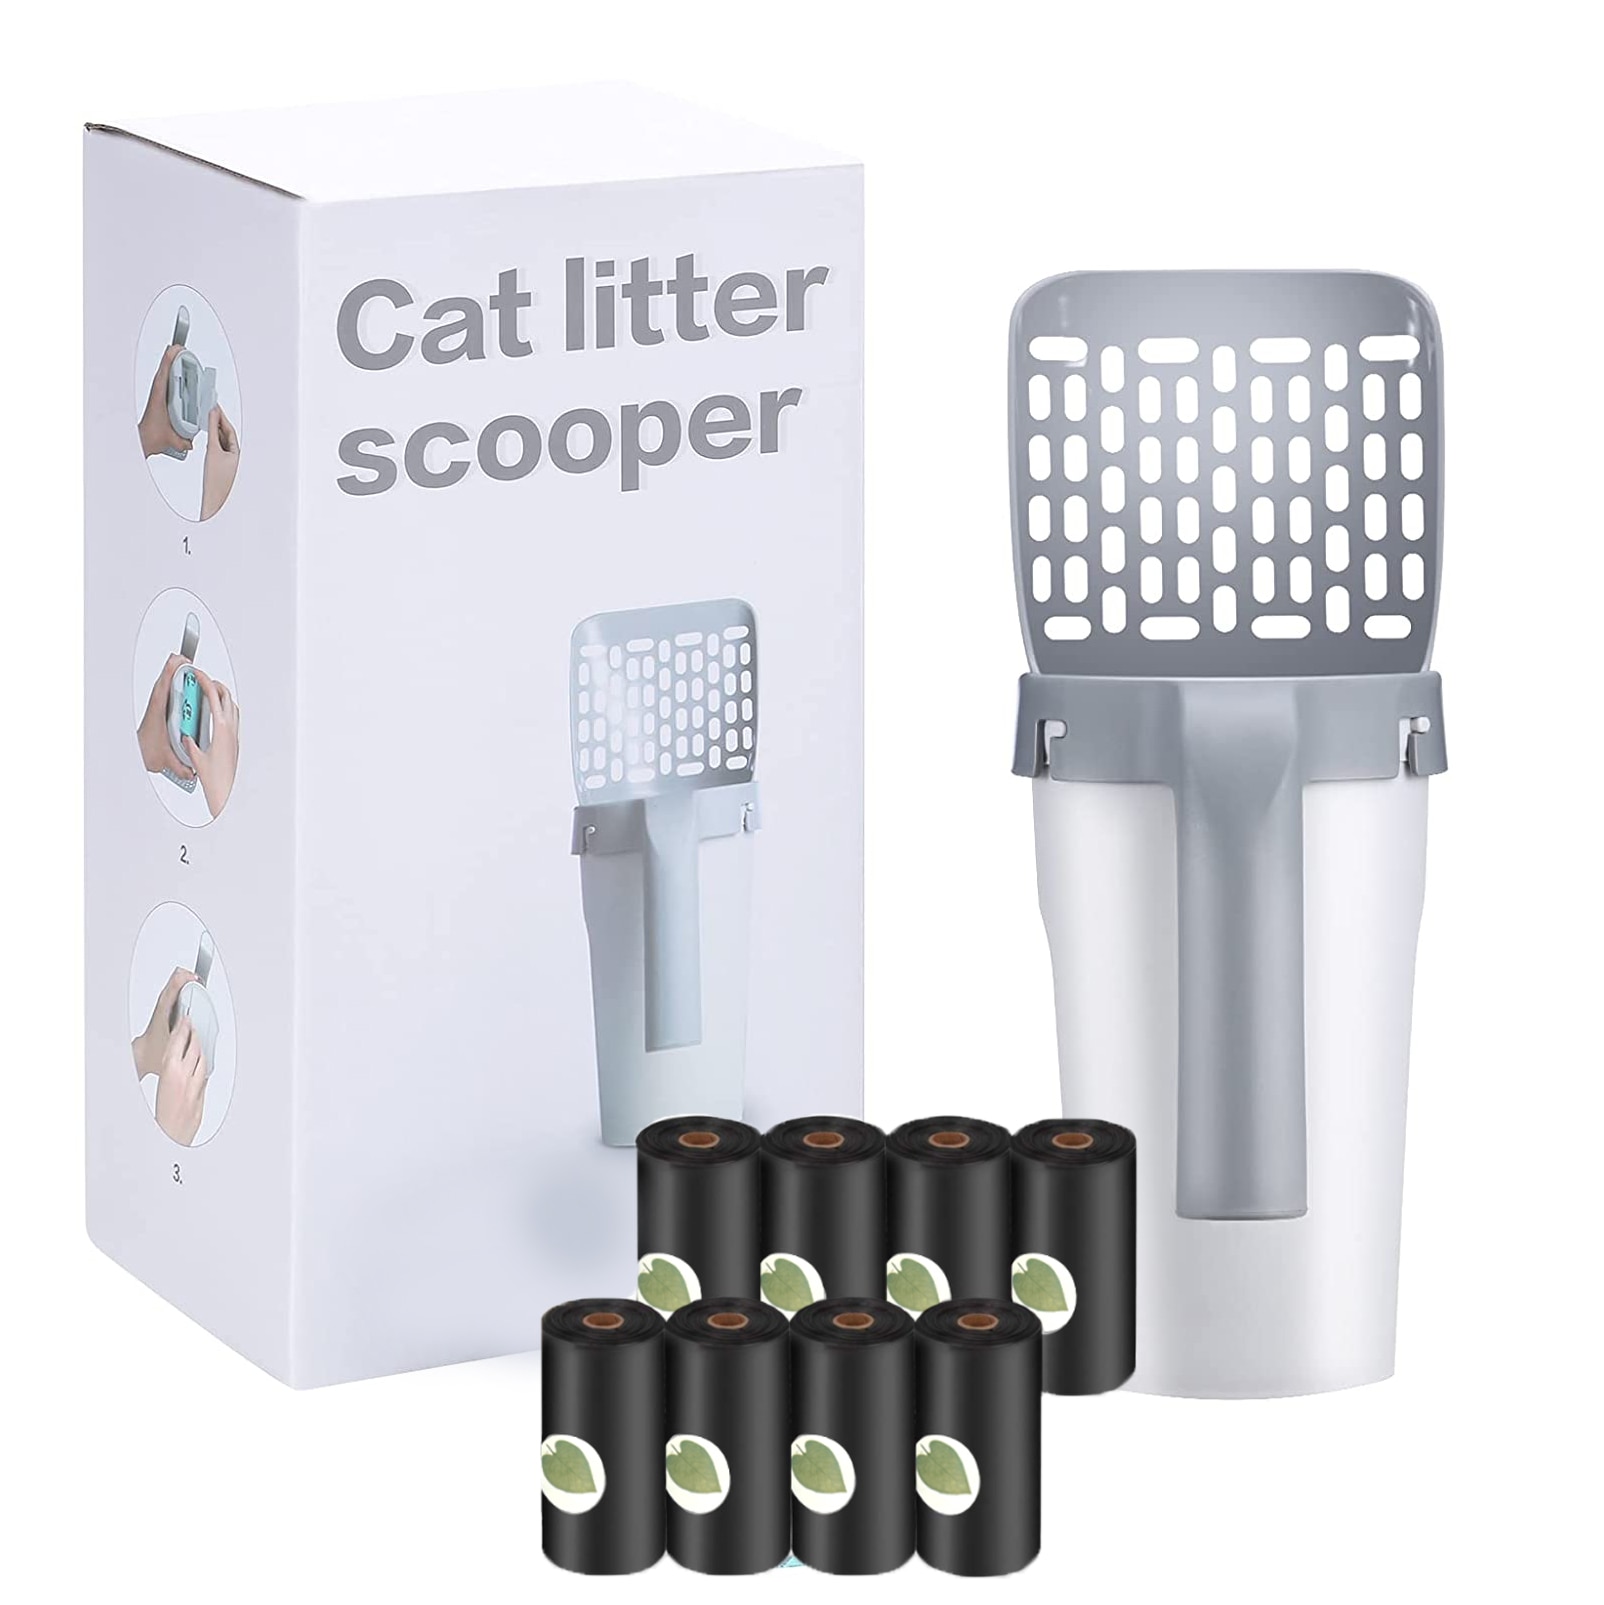 Cat Litter Scoop with bag holder